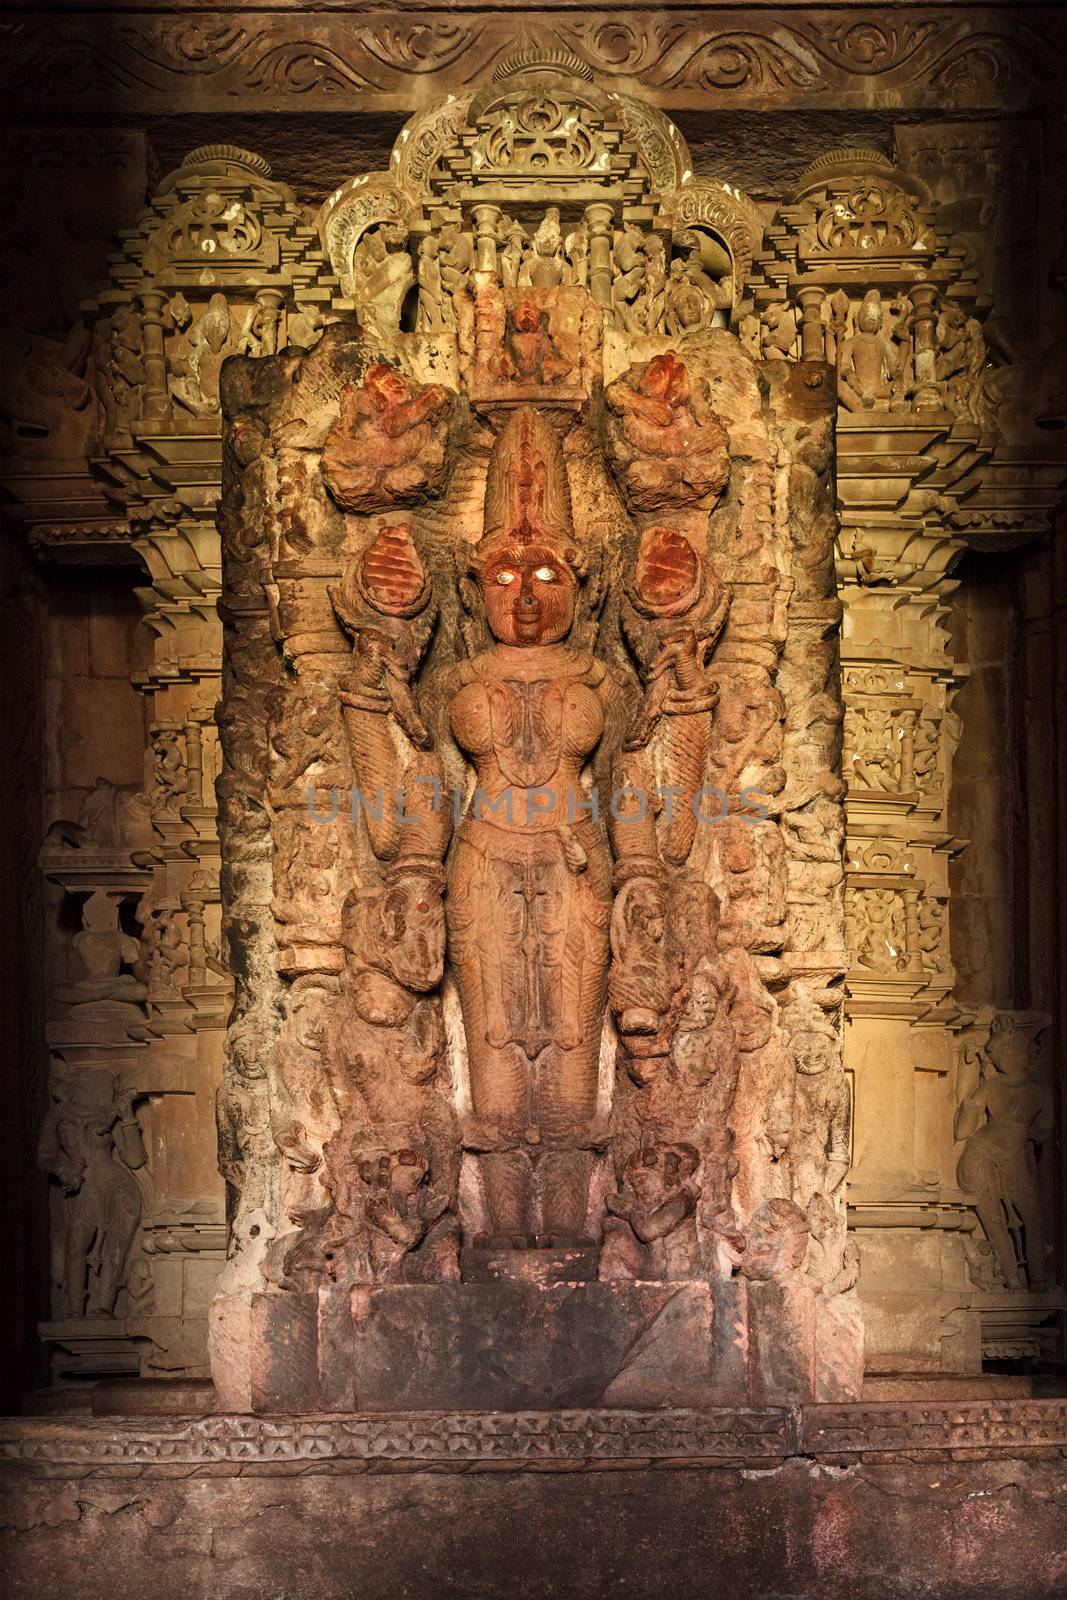 Lakshmi Hindu Goddess Image statue by dimol